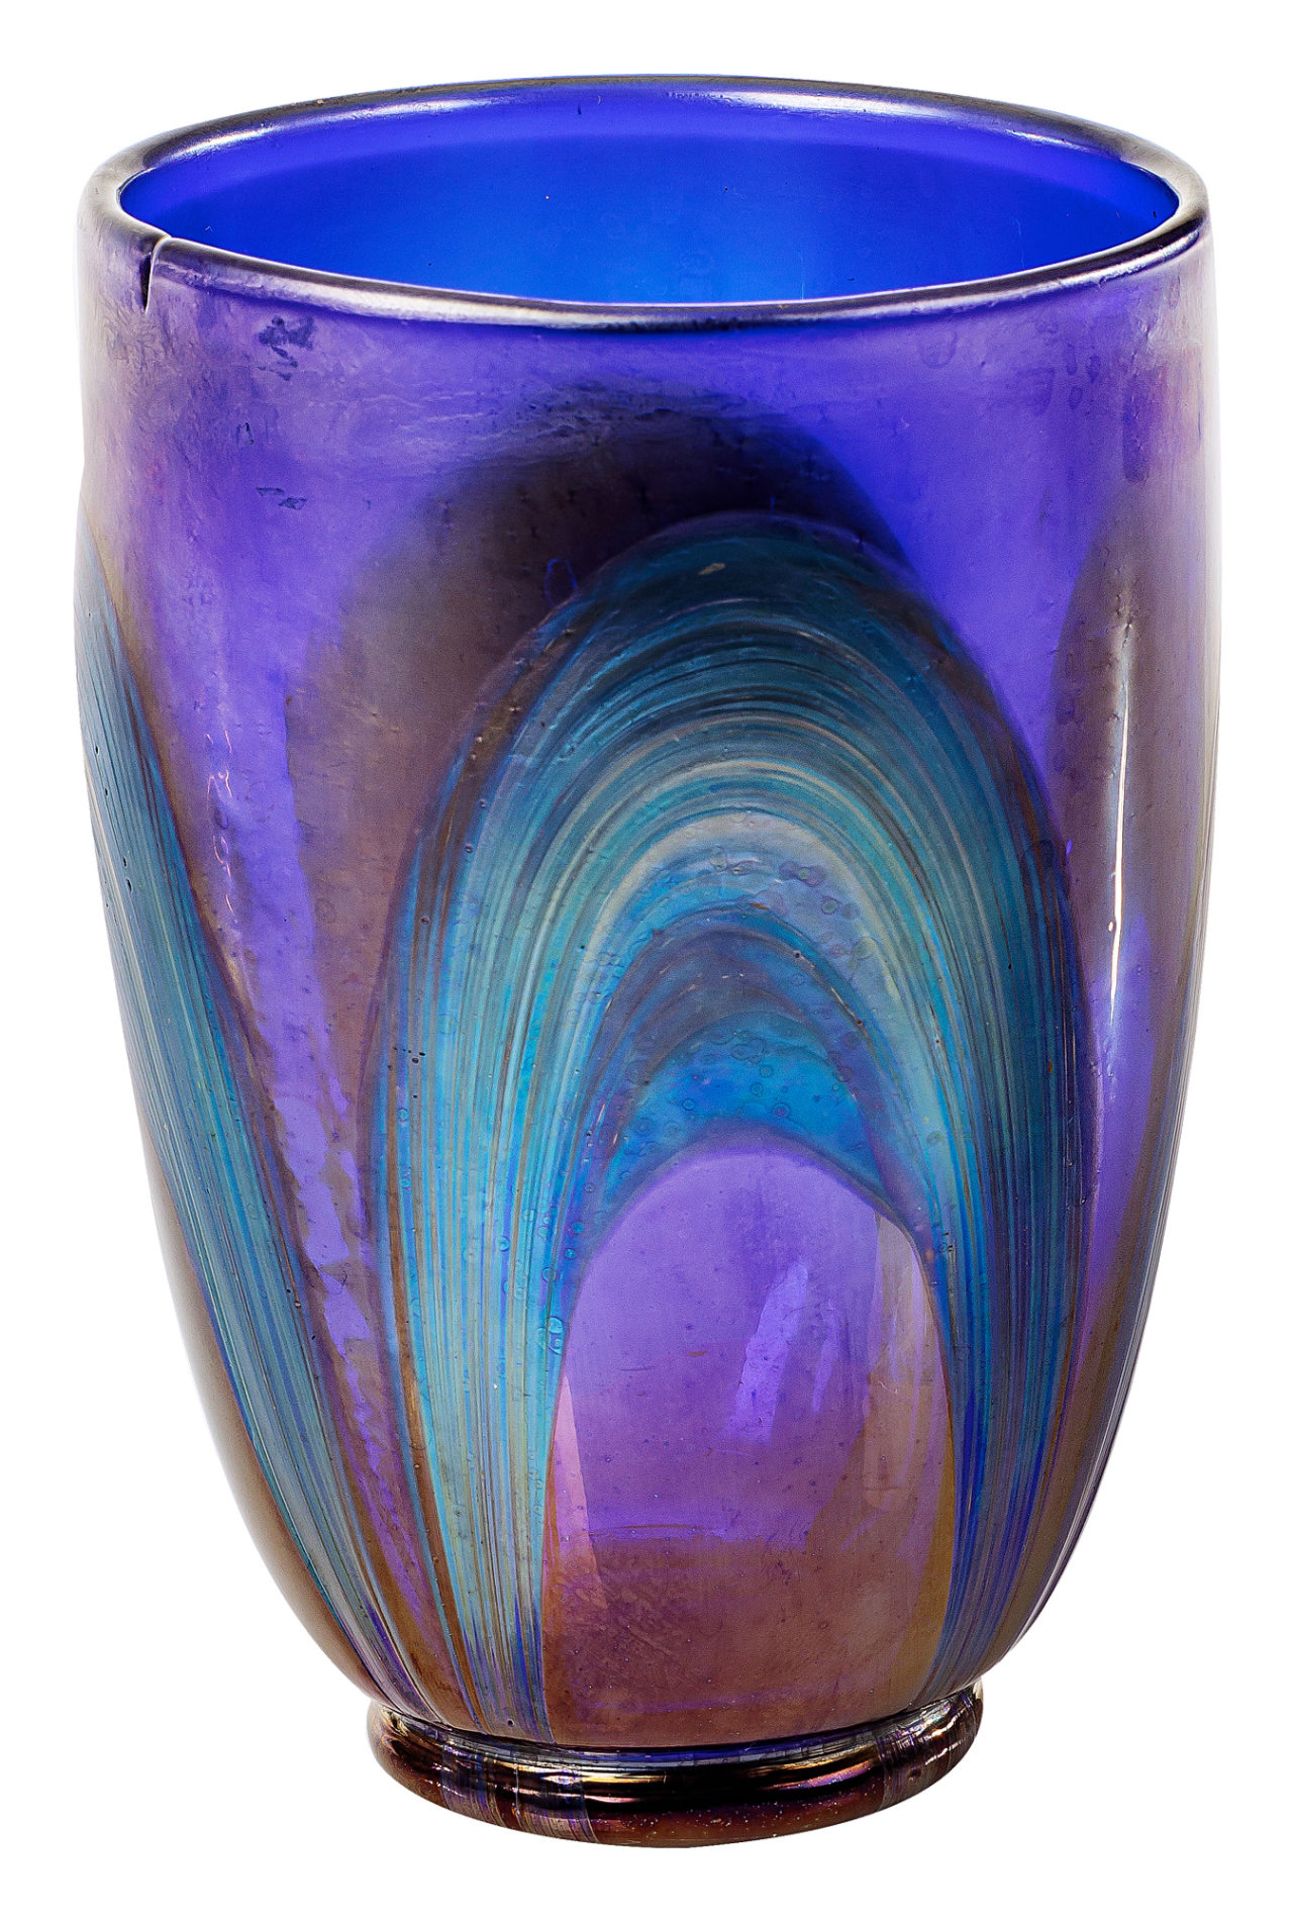 Ovoid vase with iridescent decor